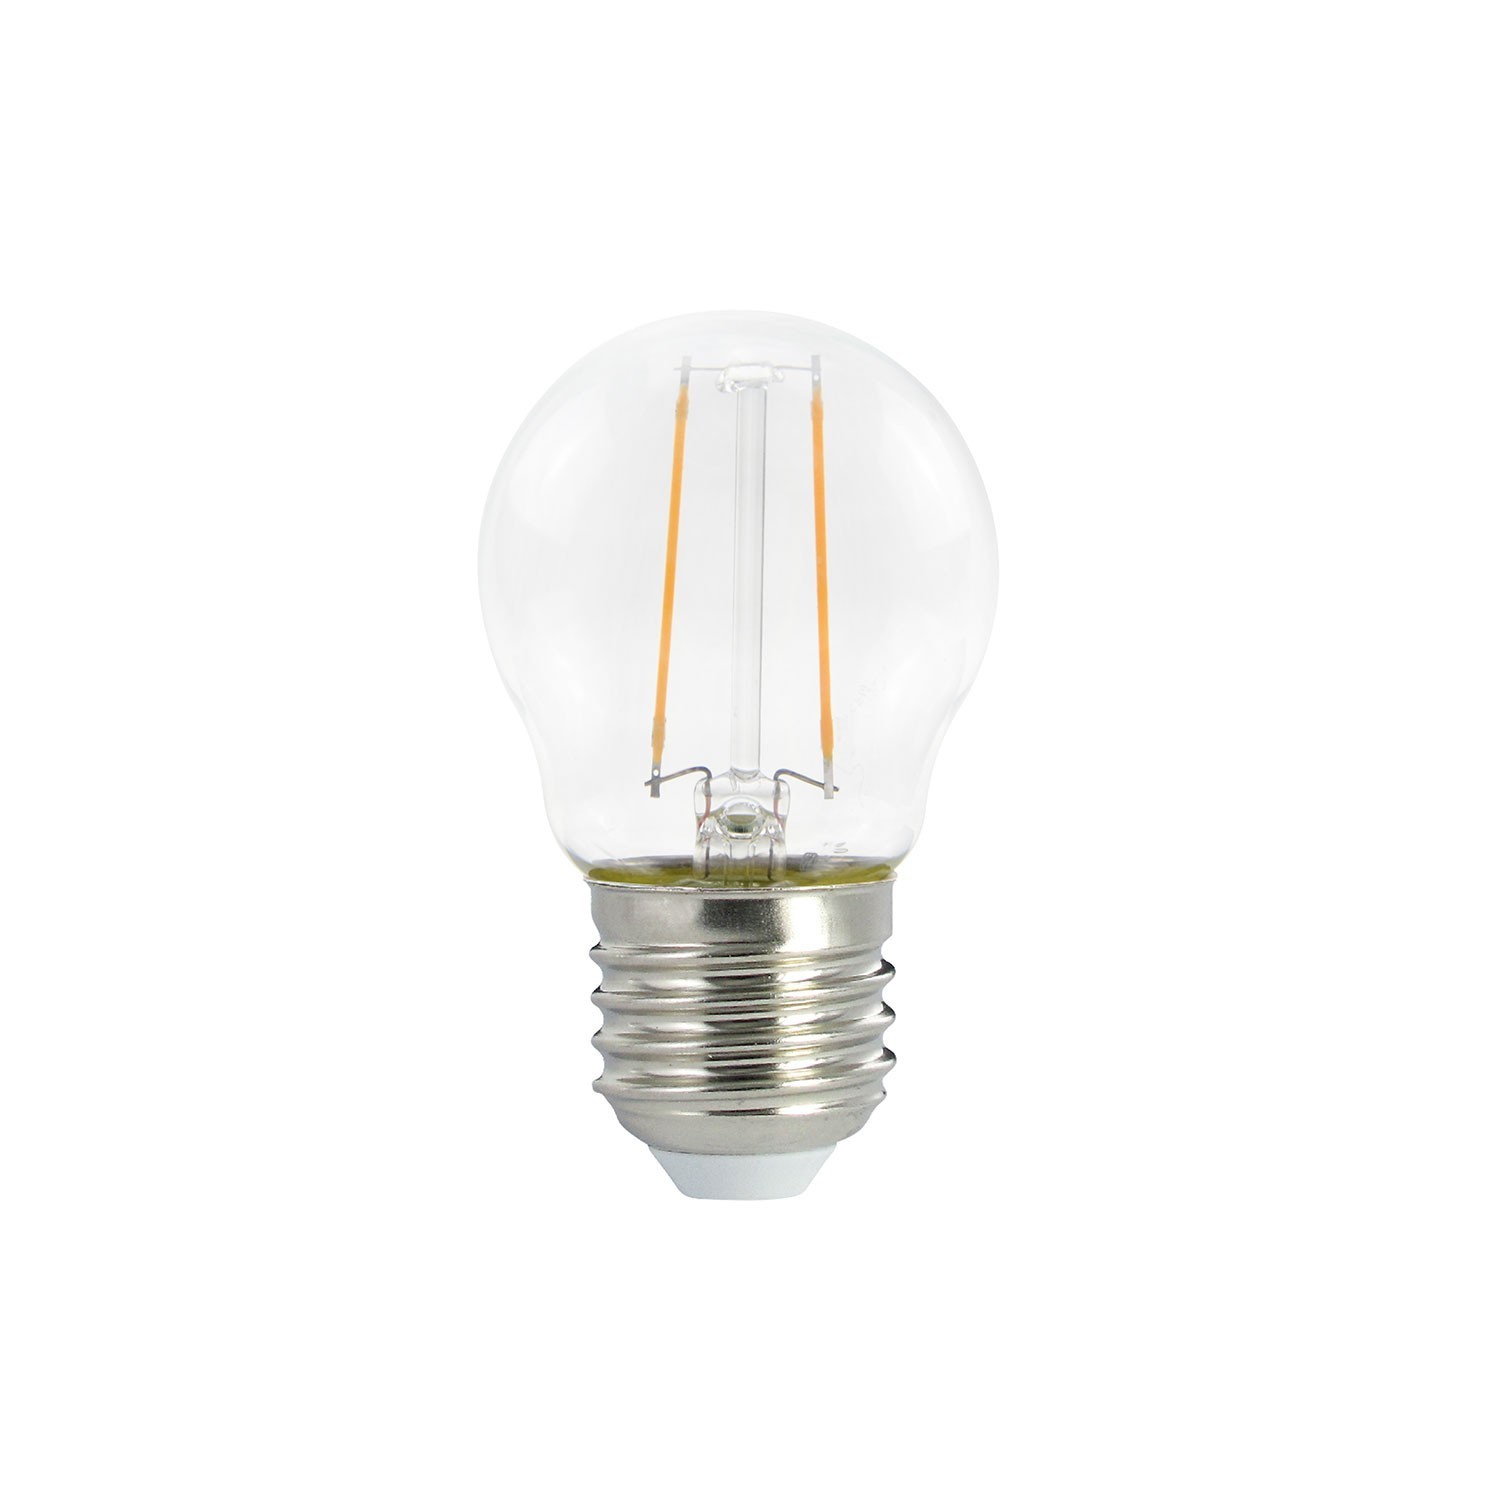 LED Light Bulb Globetta G45 Decorative Clear 1.4W 136Lm E27 2700K